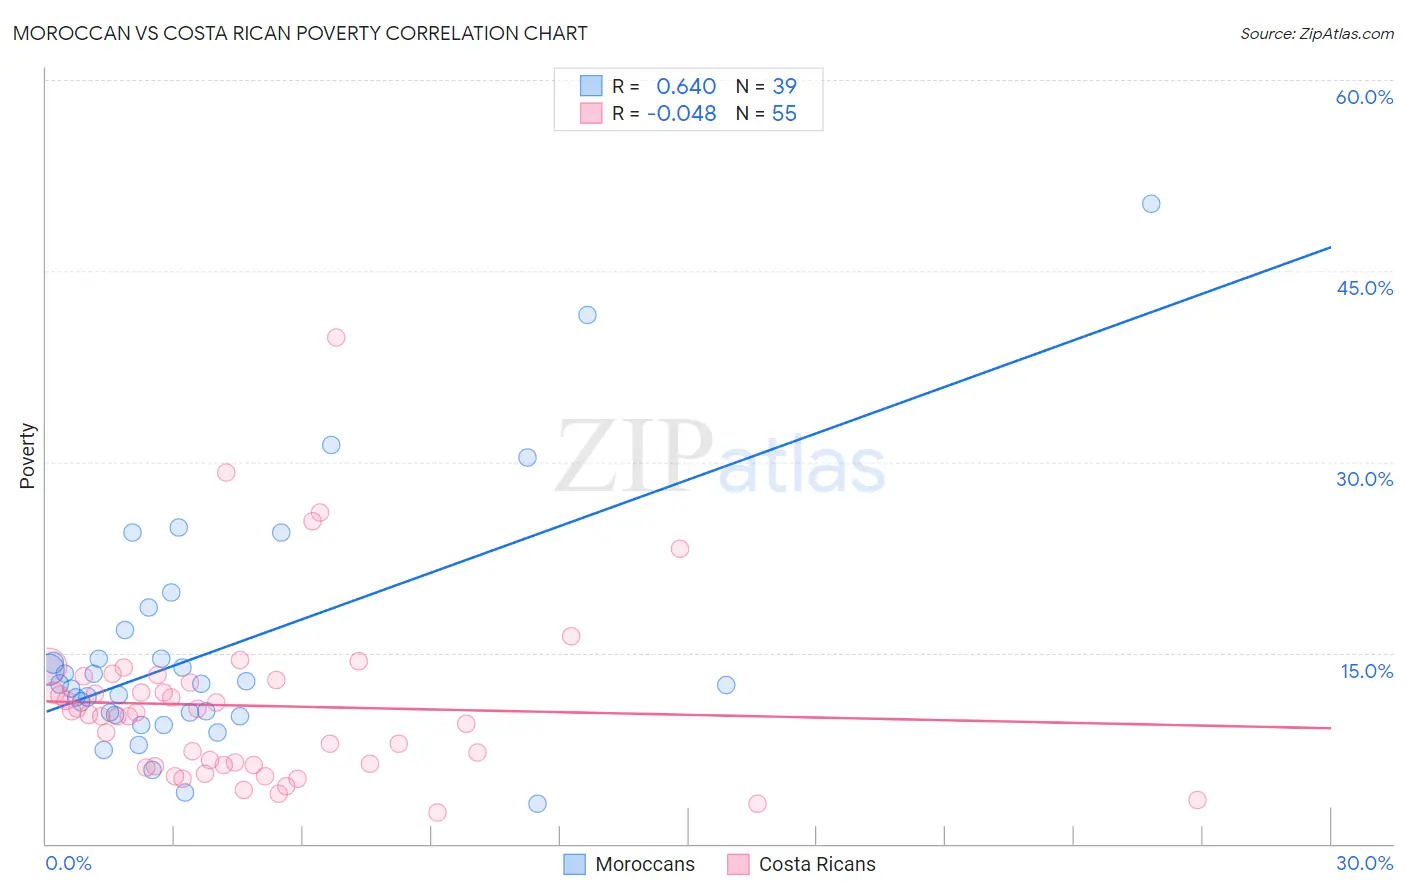 Moroccan vs Costa Rican Poverty